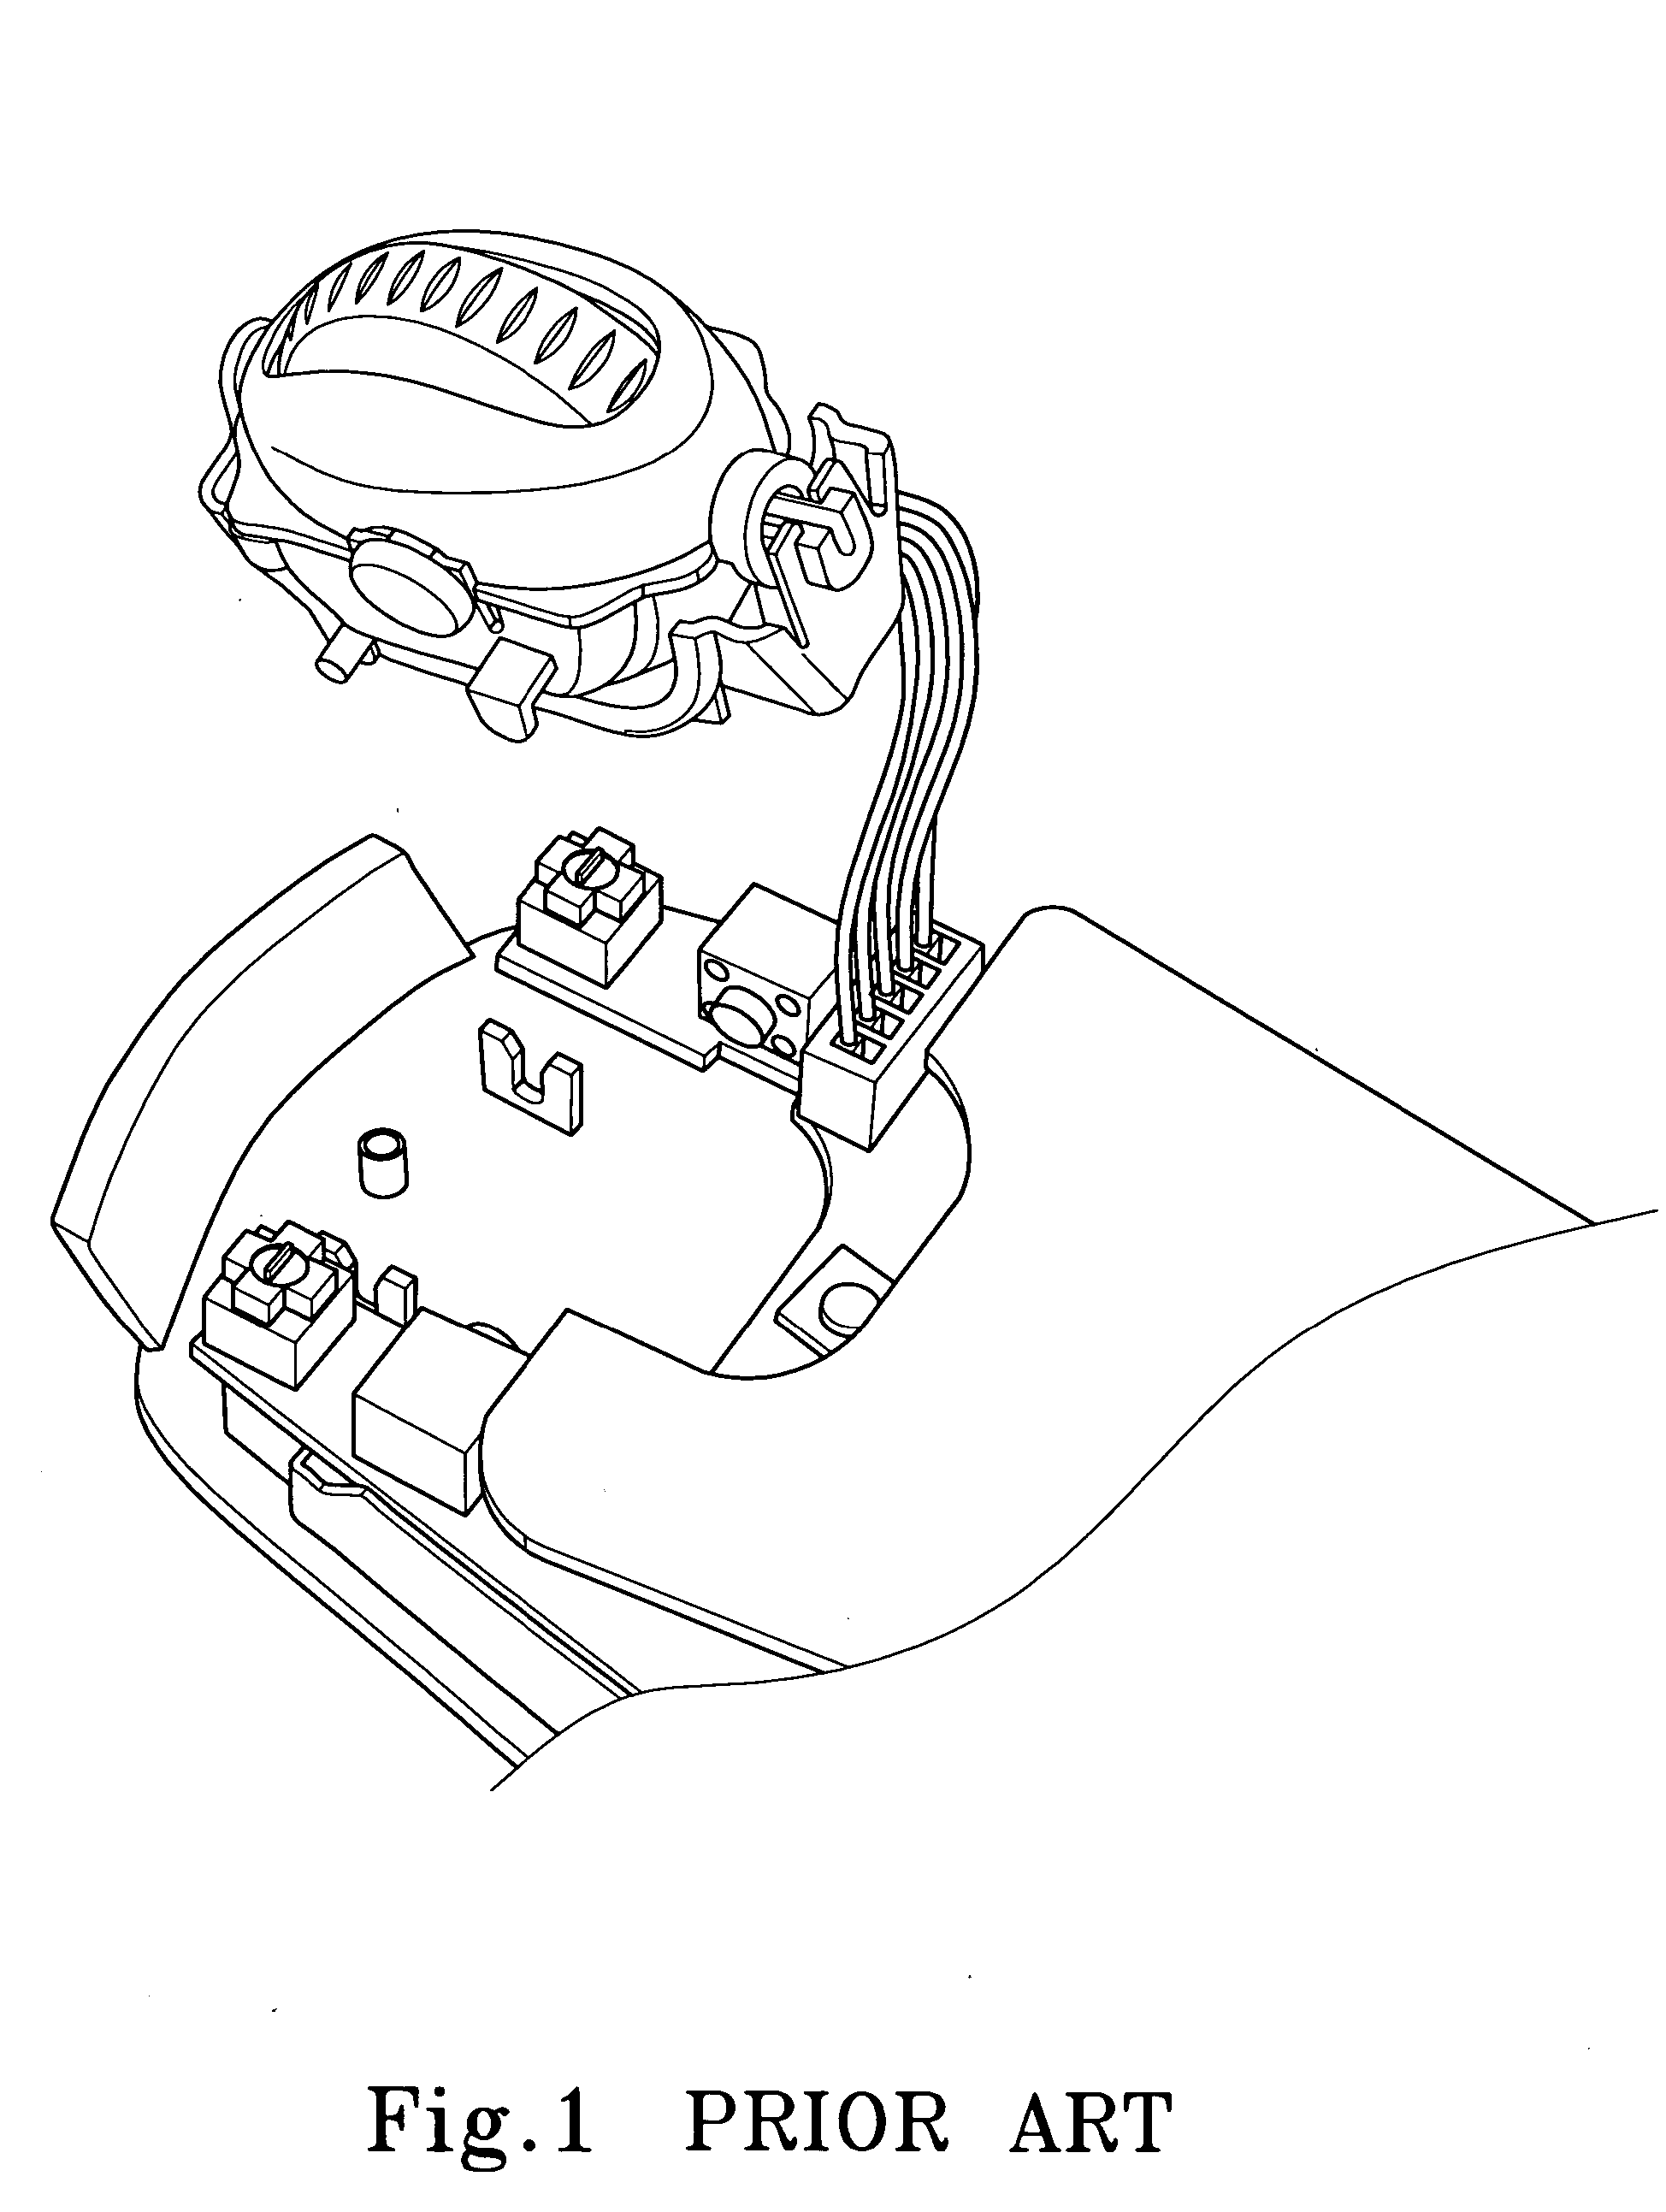 Wheel type mechanical instruction switch